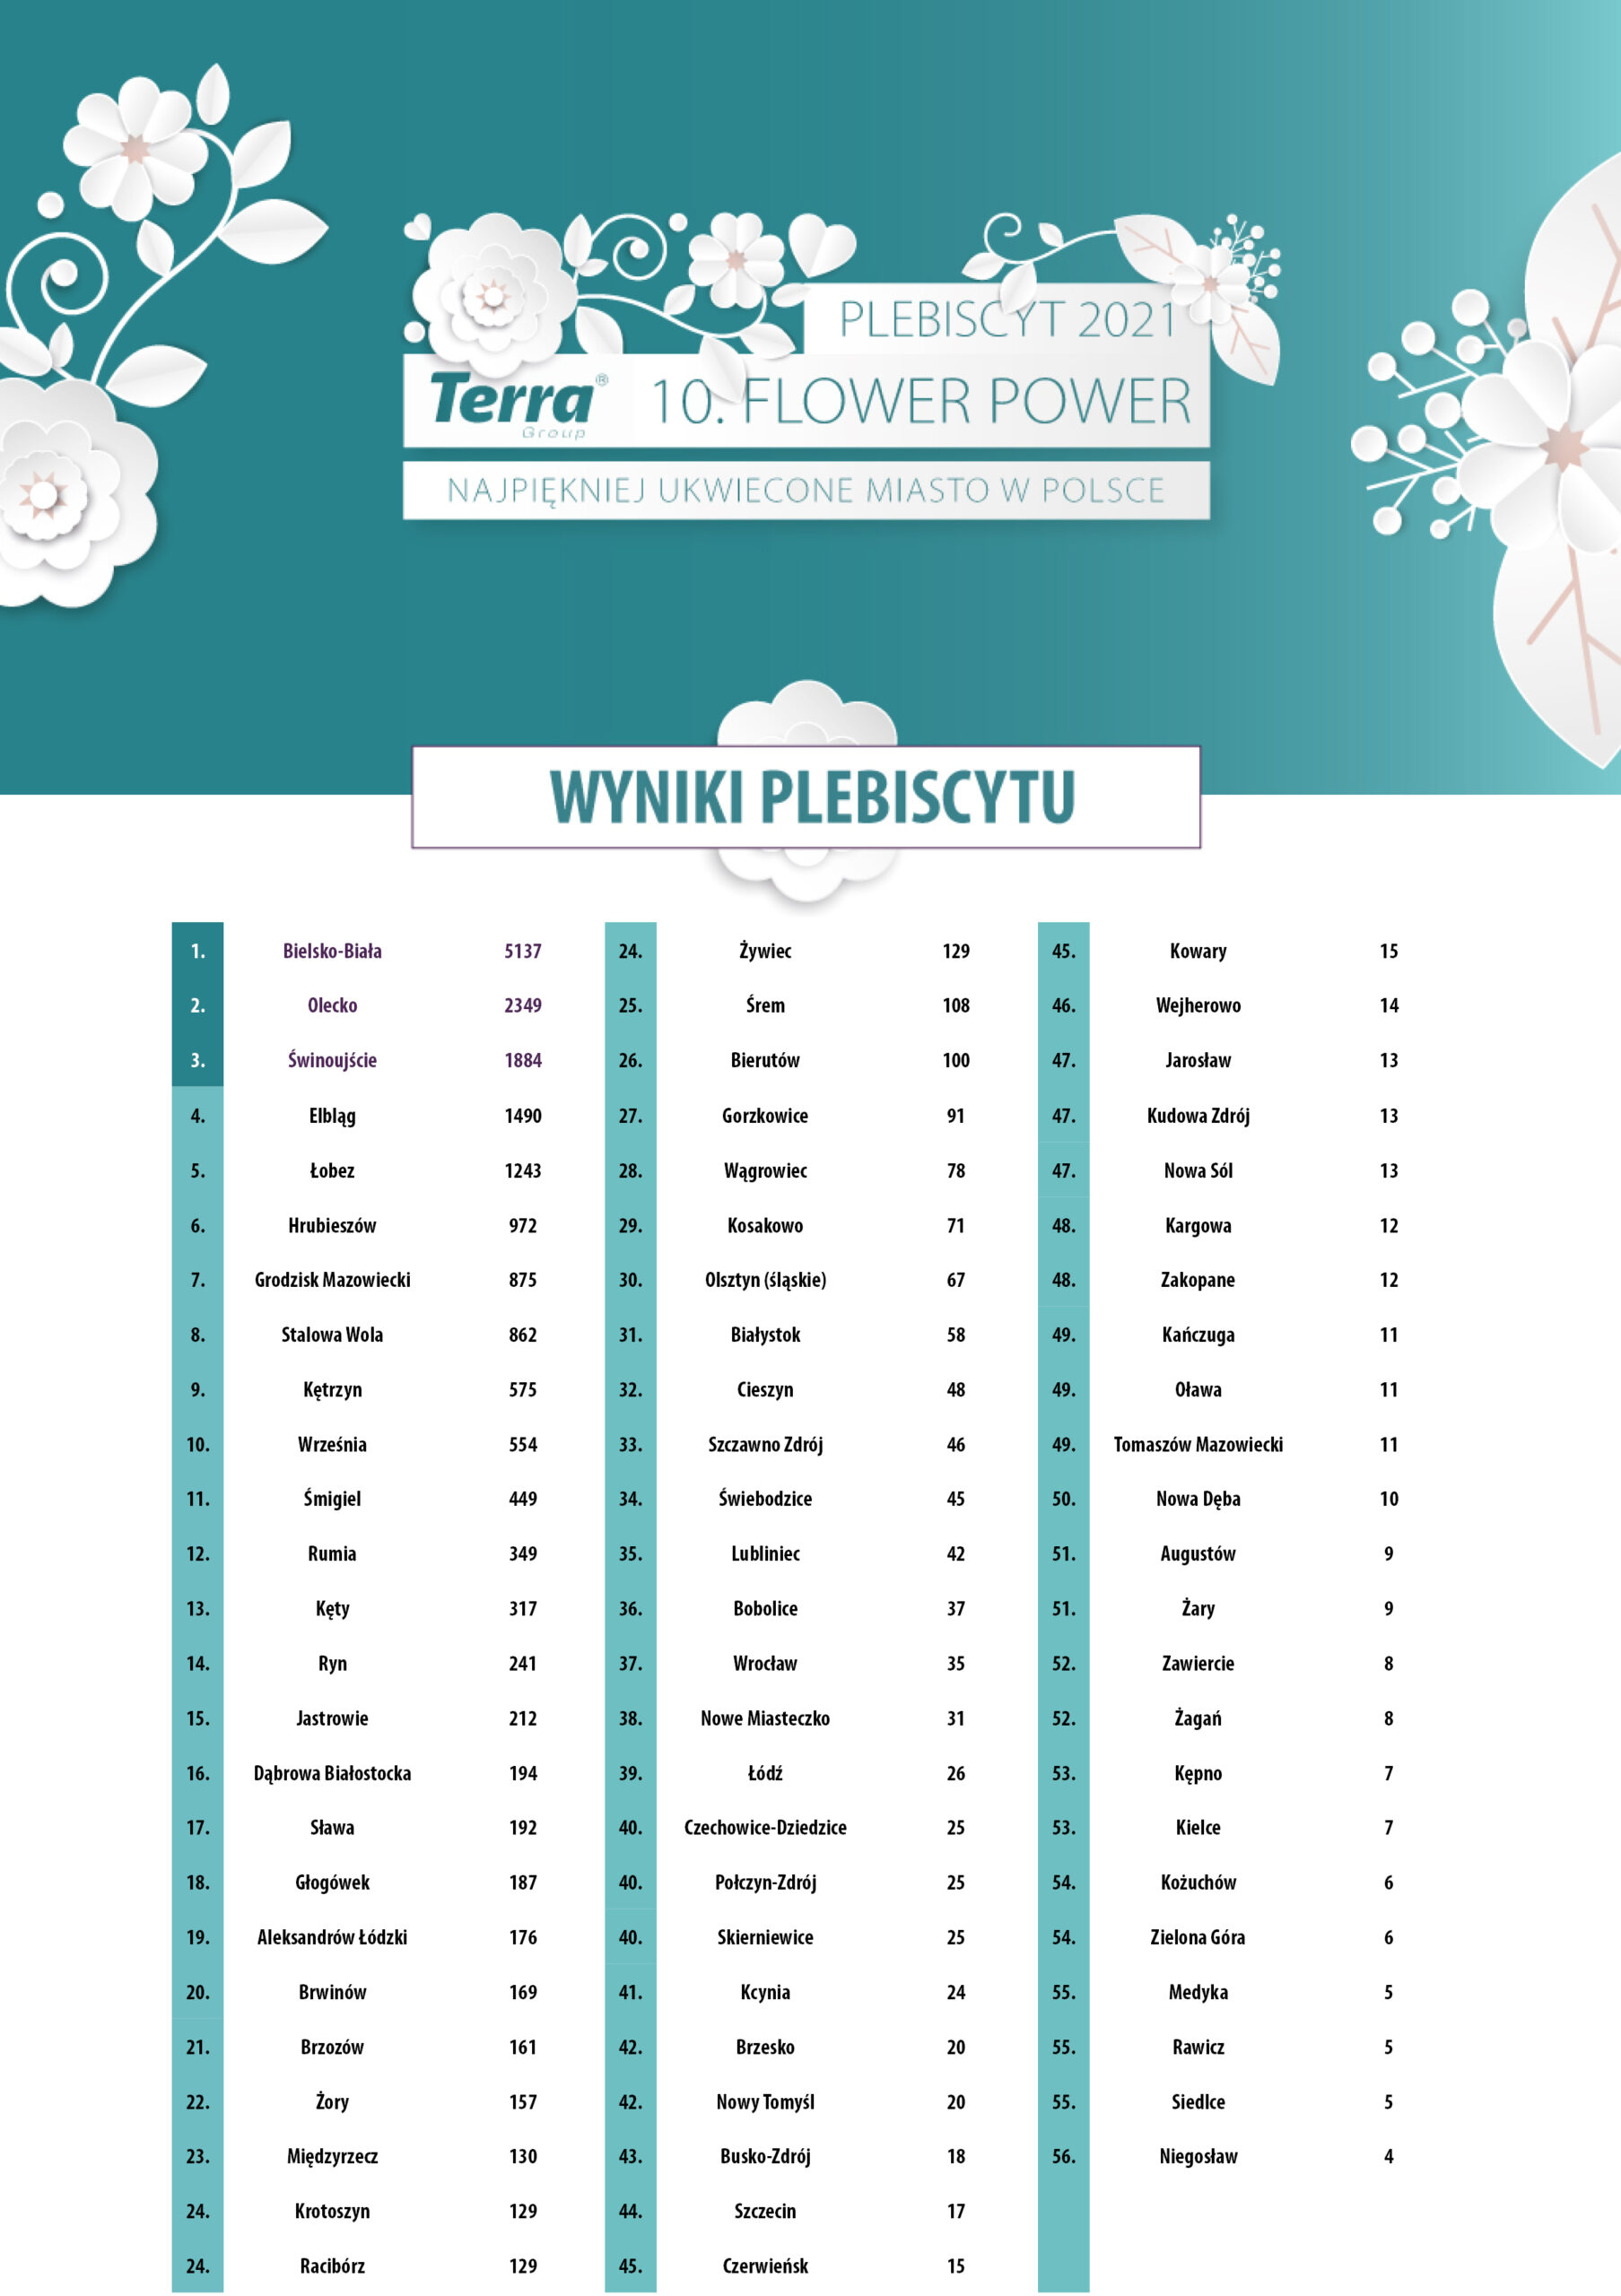 terra-flower-power-2021-wyniki-plebiscytu